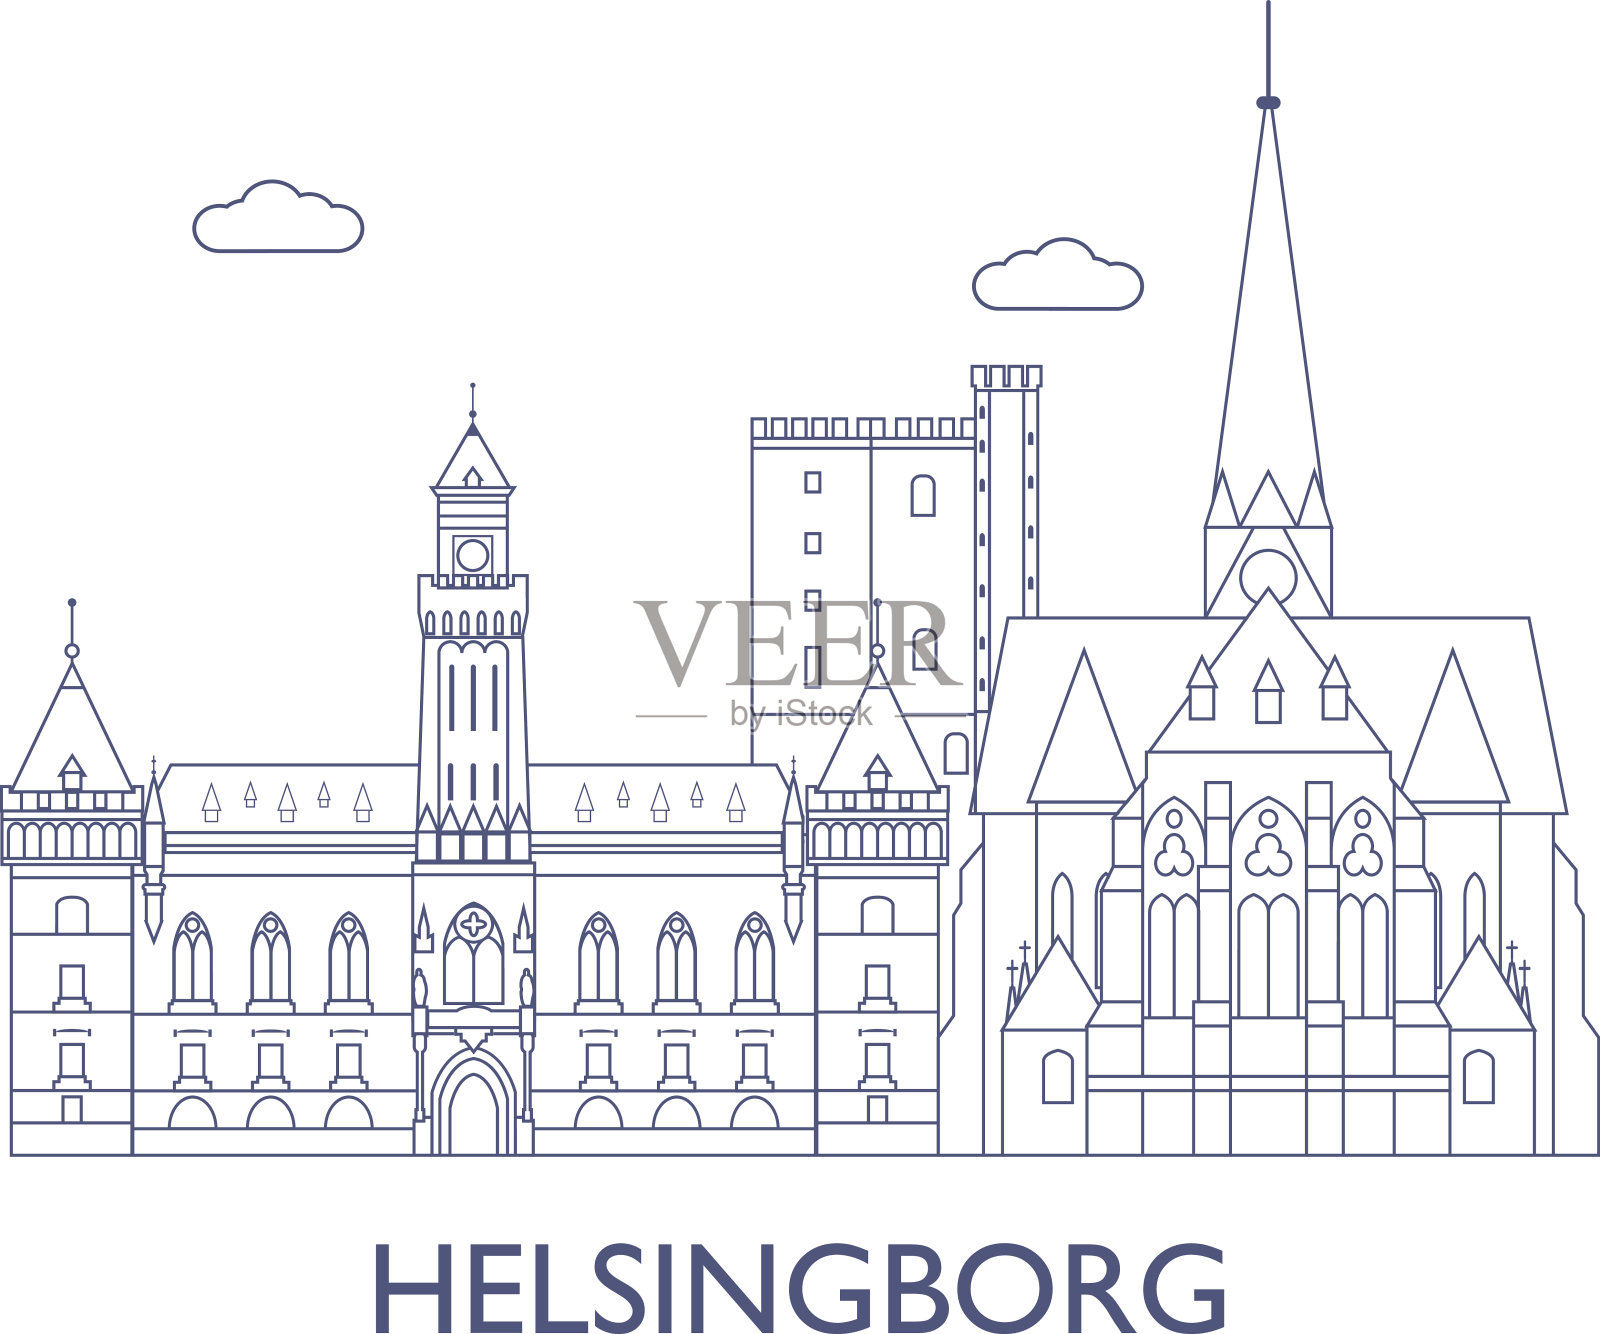 Helsingborg。这个城市最著名的建筑插画图片素材